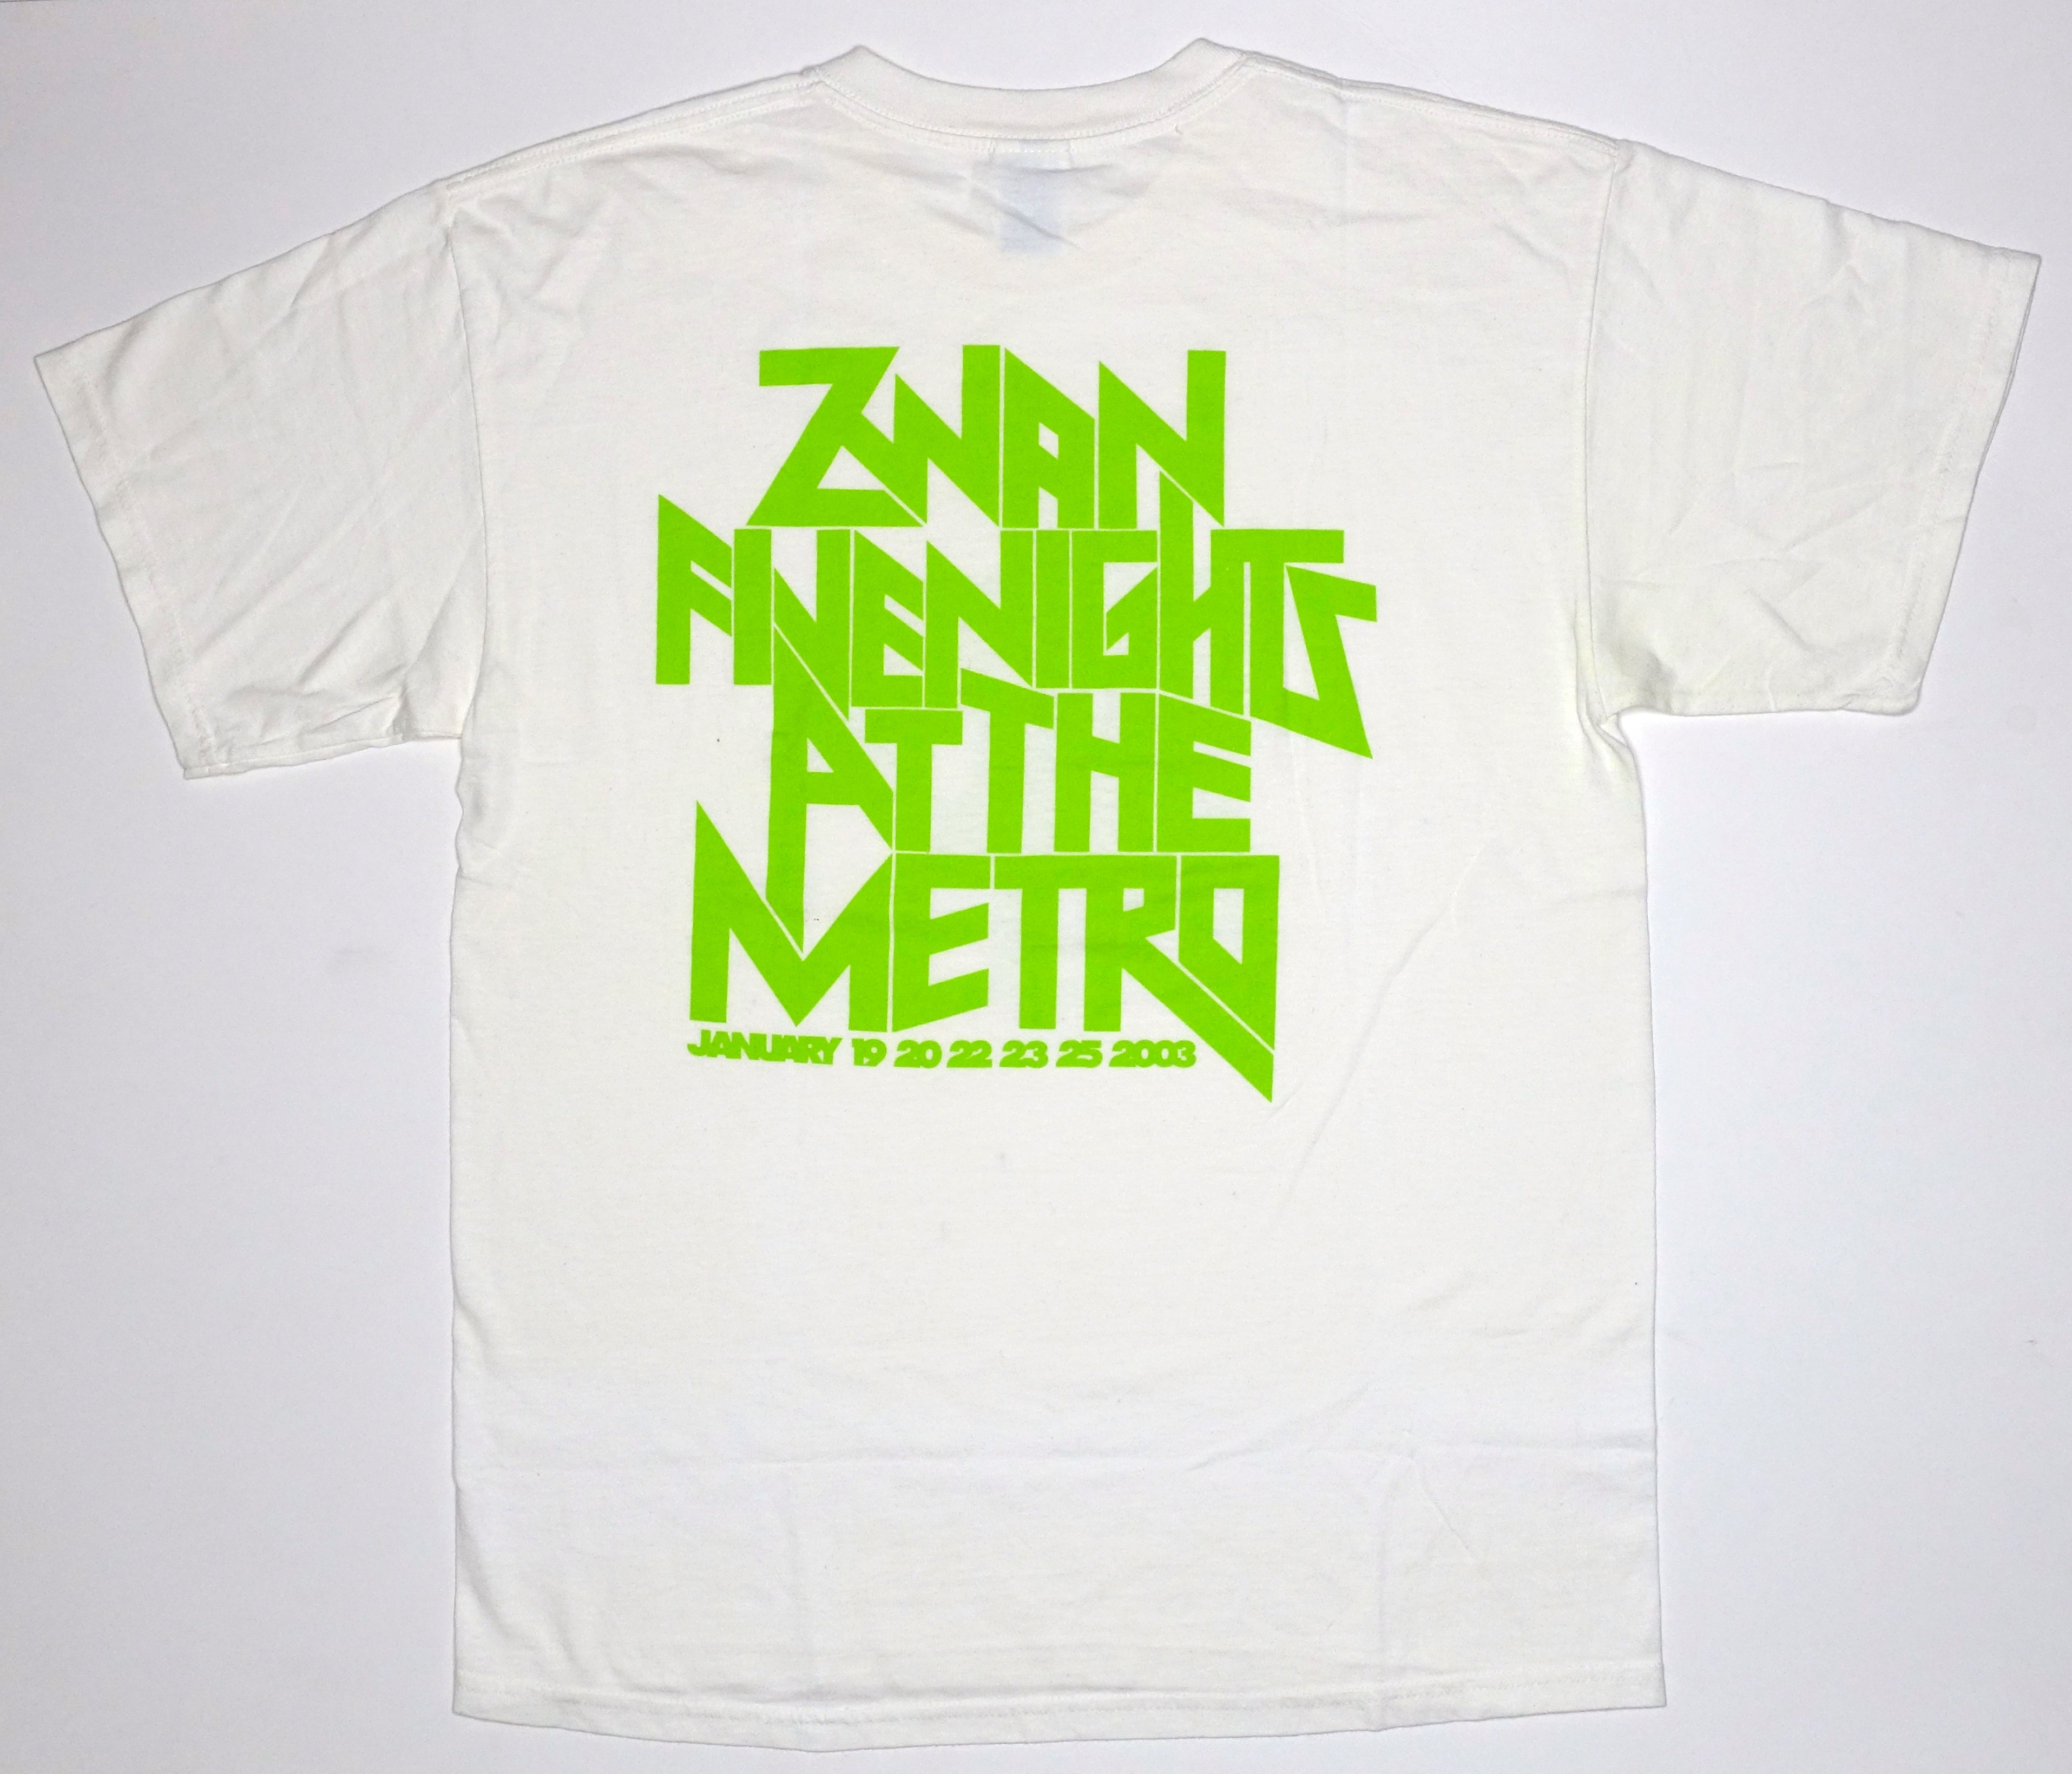 Zwan - 5 Nights At The Metro 2003 Tour (Art by Geoff McFetridge) Shirt Size XL